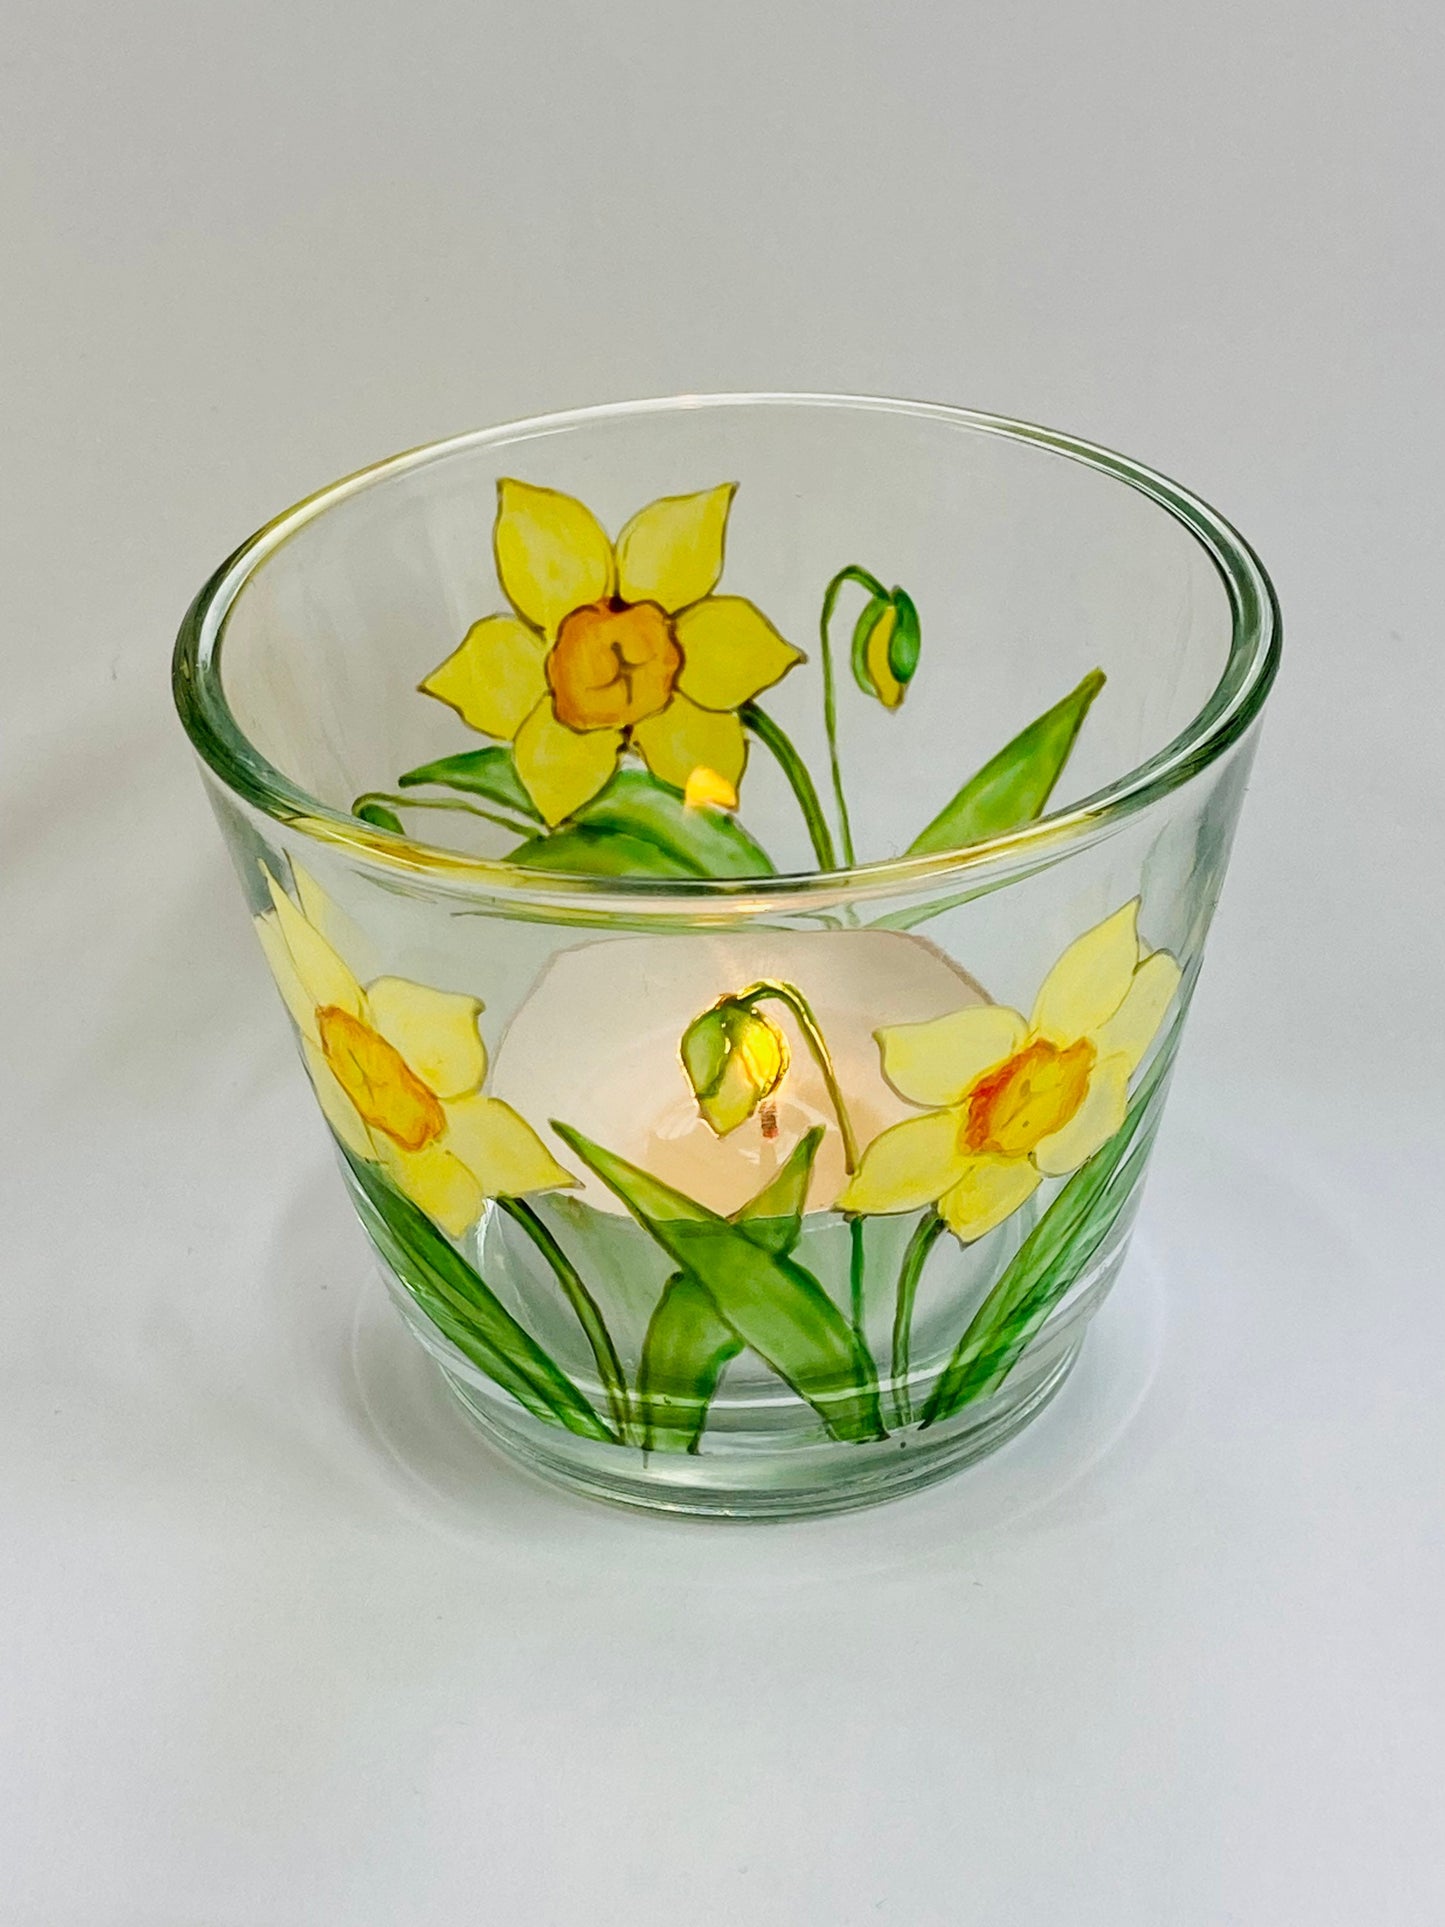 Daffodils Narcissi design tealight holder